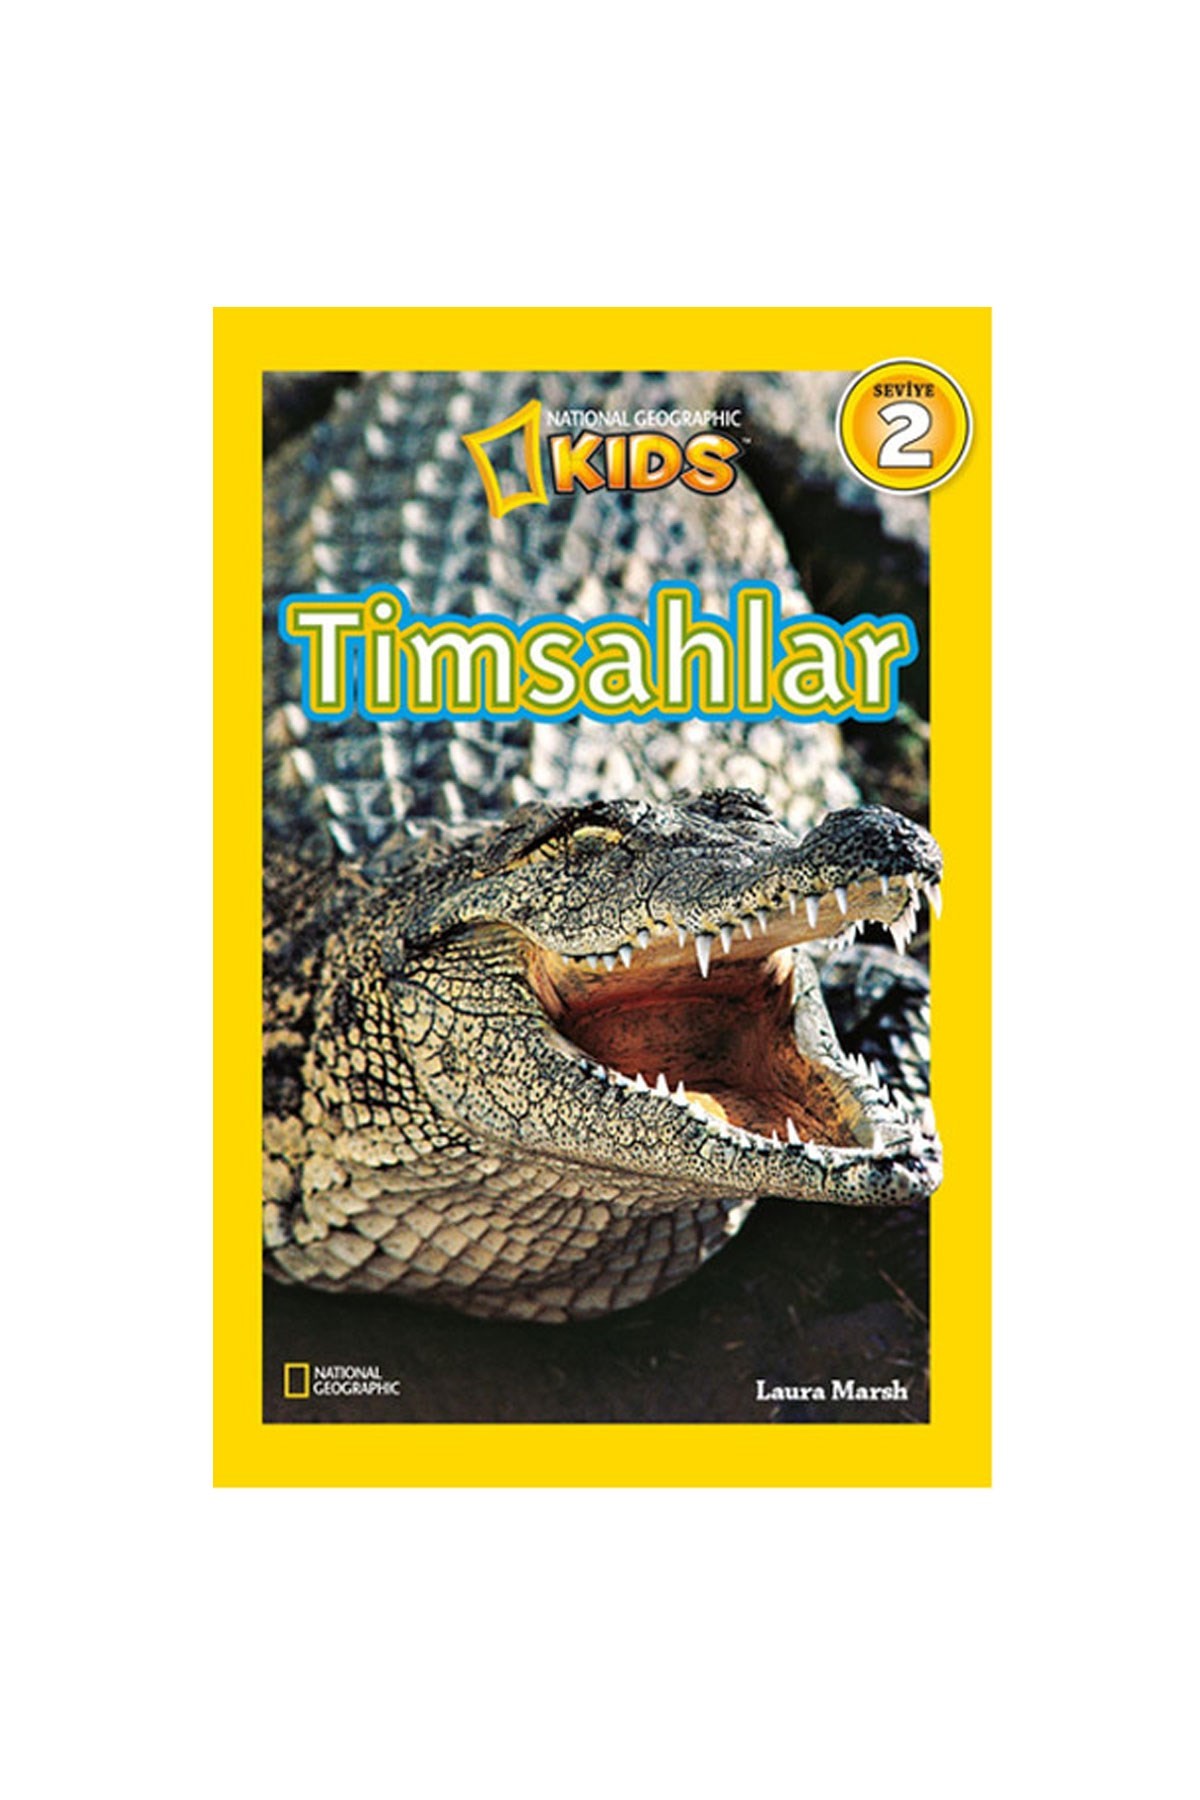 National Geographic Kids Timsahlar